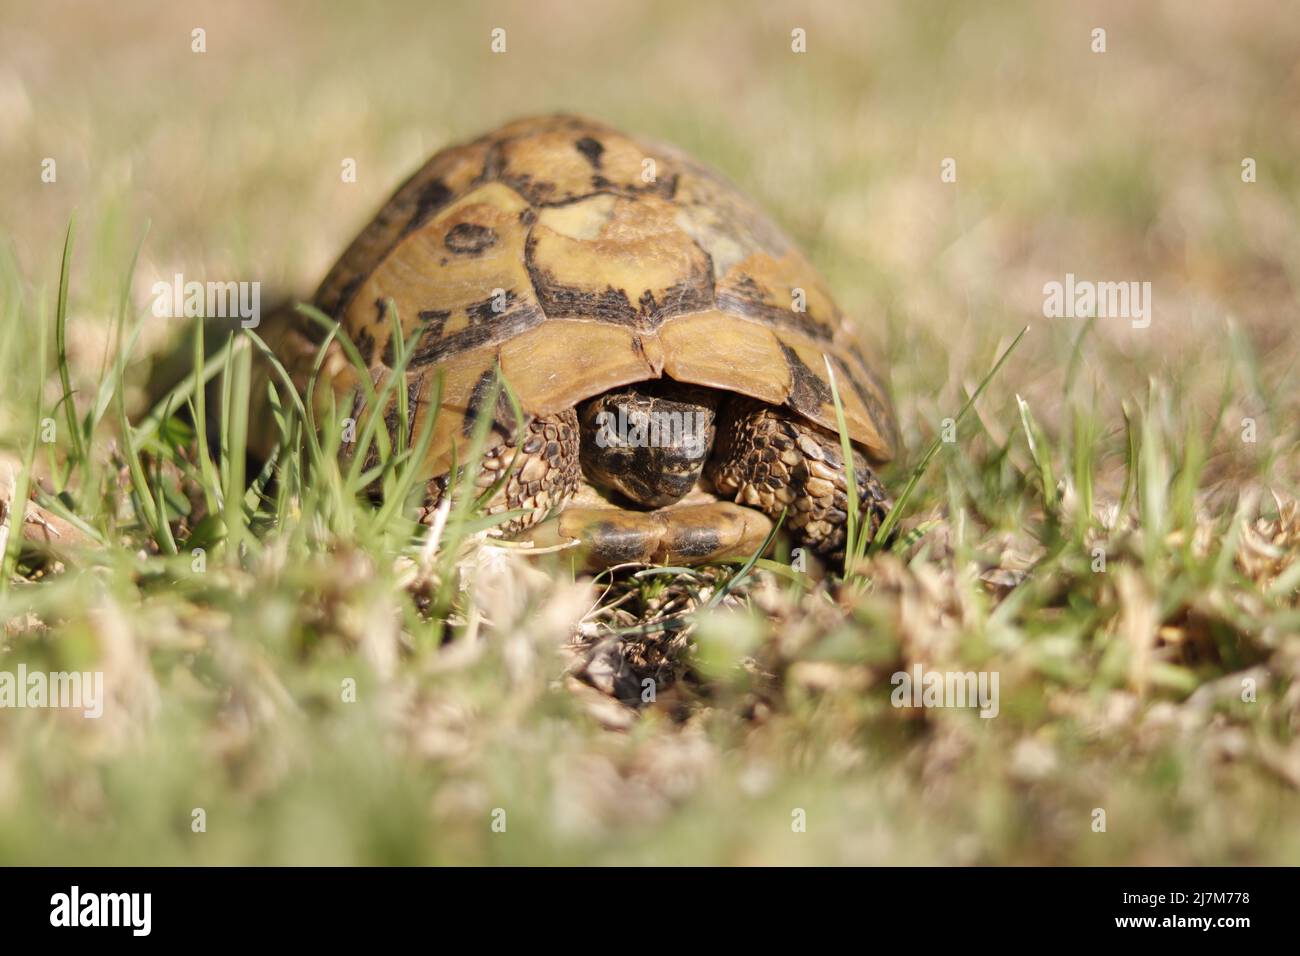 Tortoise in grass Stock Photo